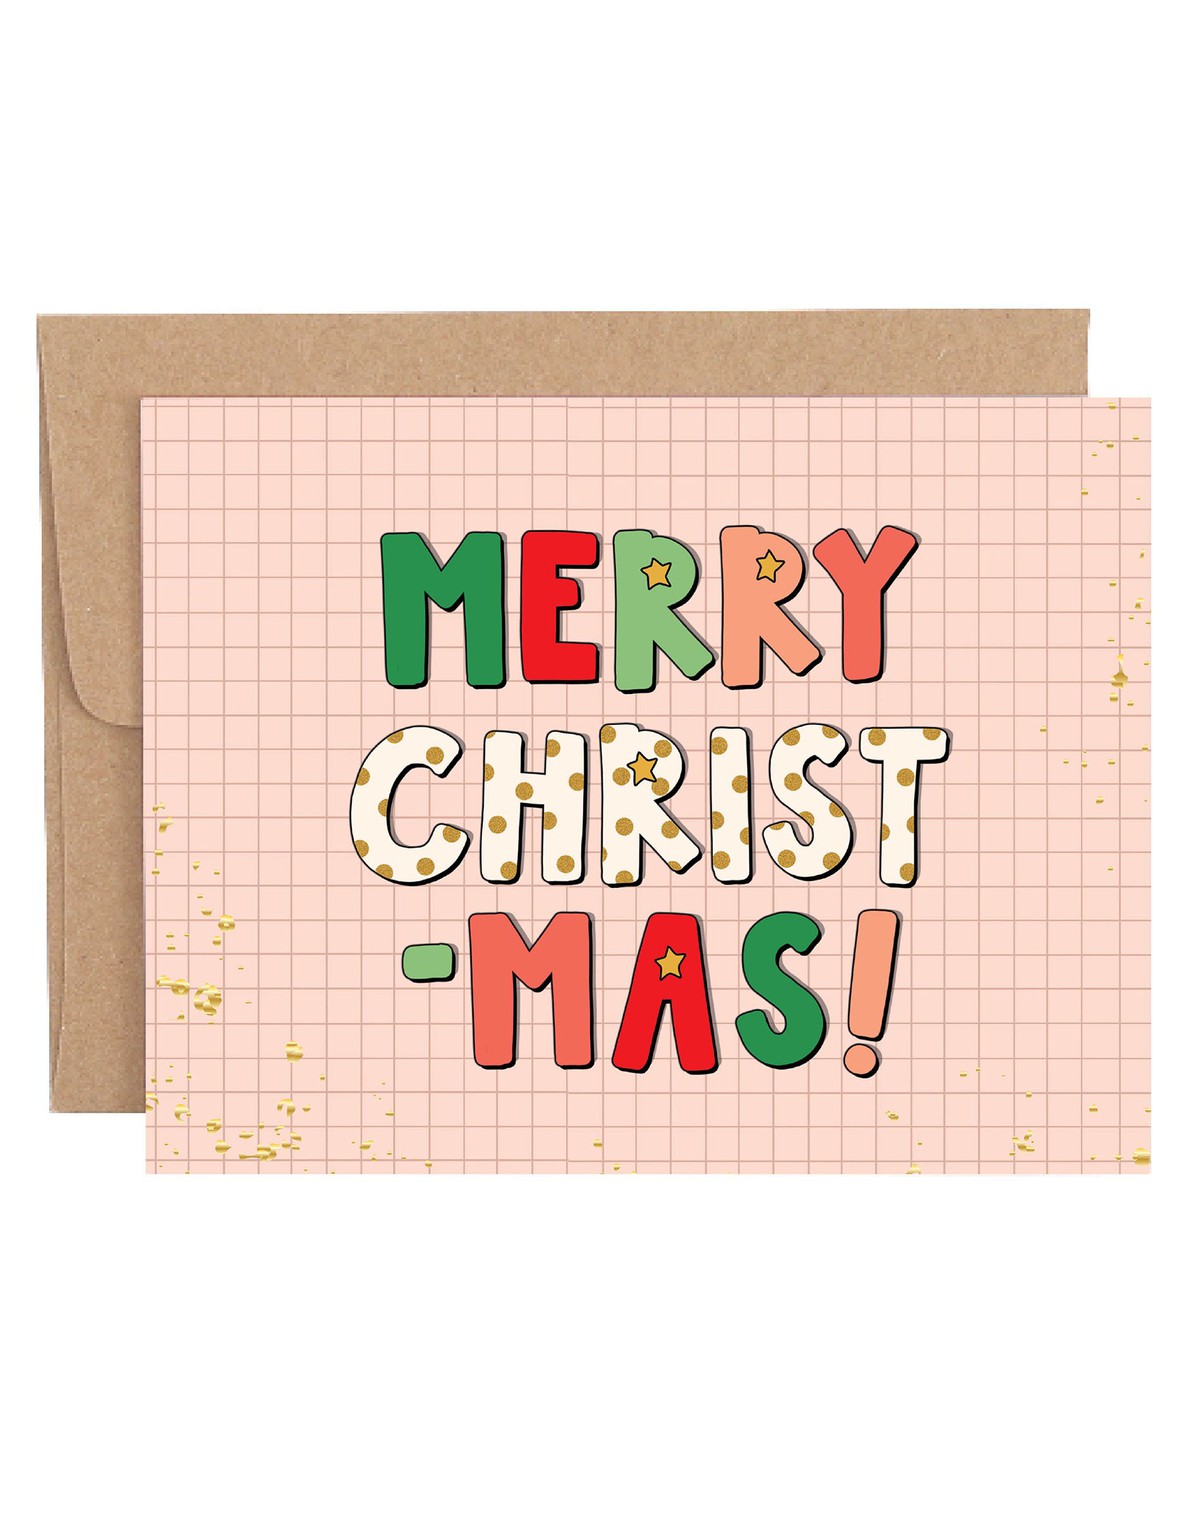 Merry Christmas Greeting Card item